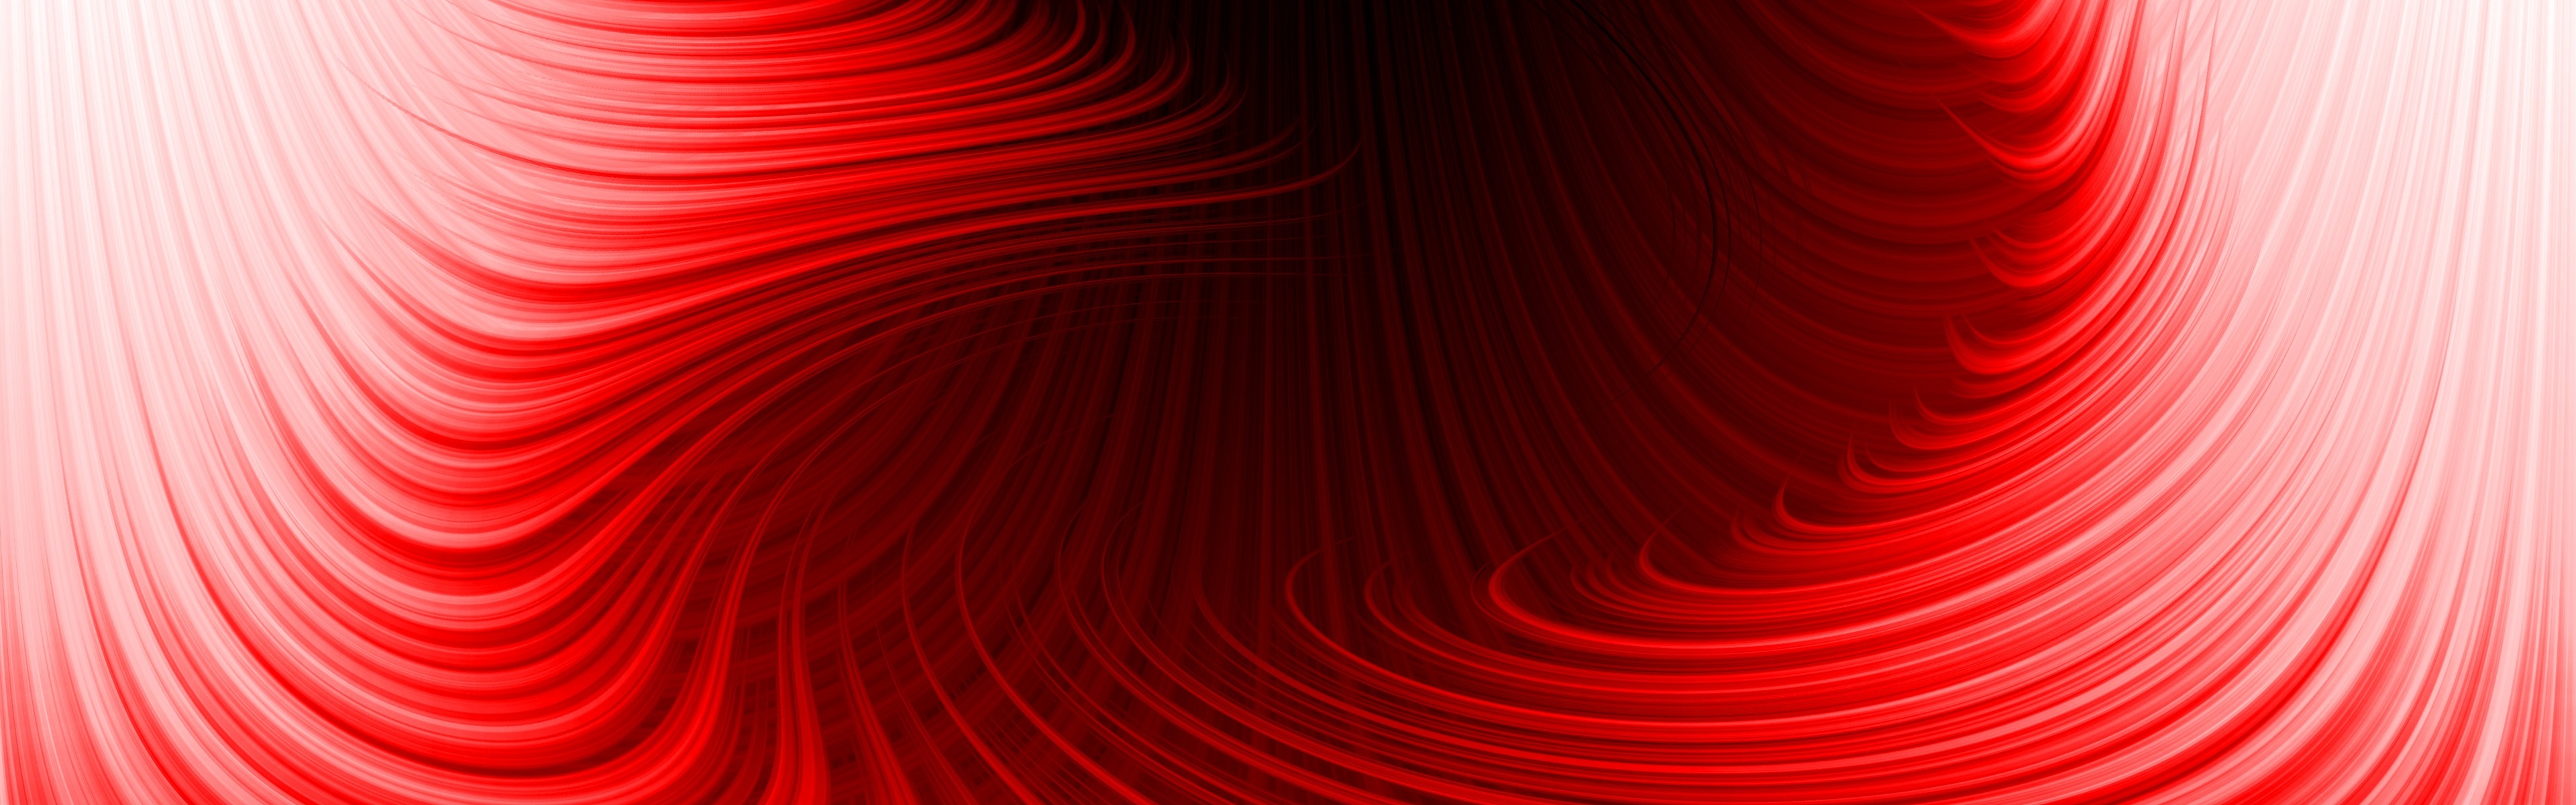 Wallpaper Abstract Lines, Red Pattern - Fond Écran Rouge Motif - HD Wallpaper 